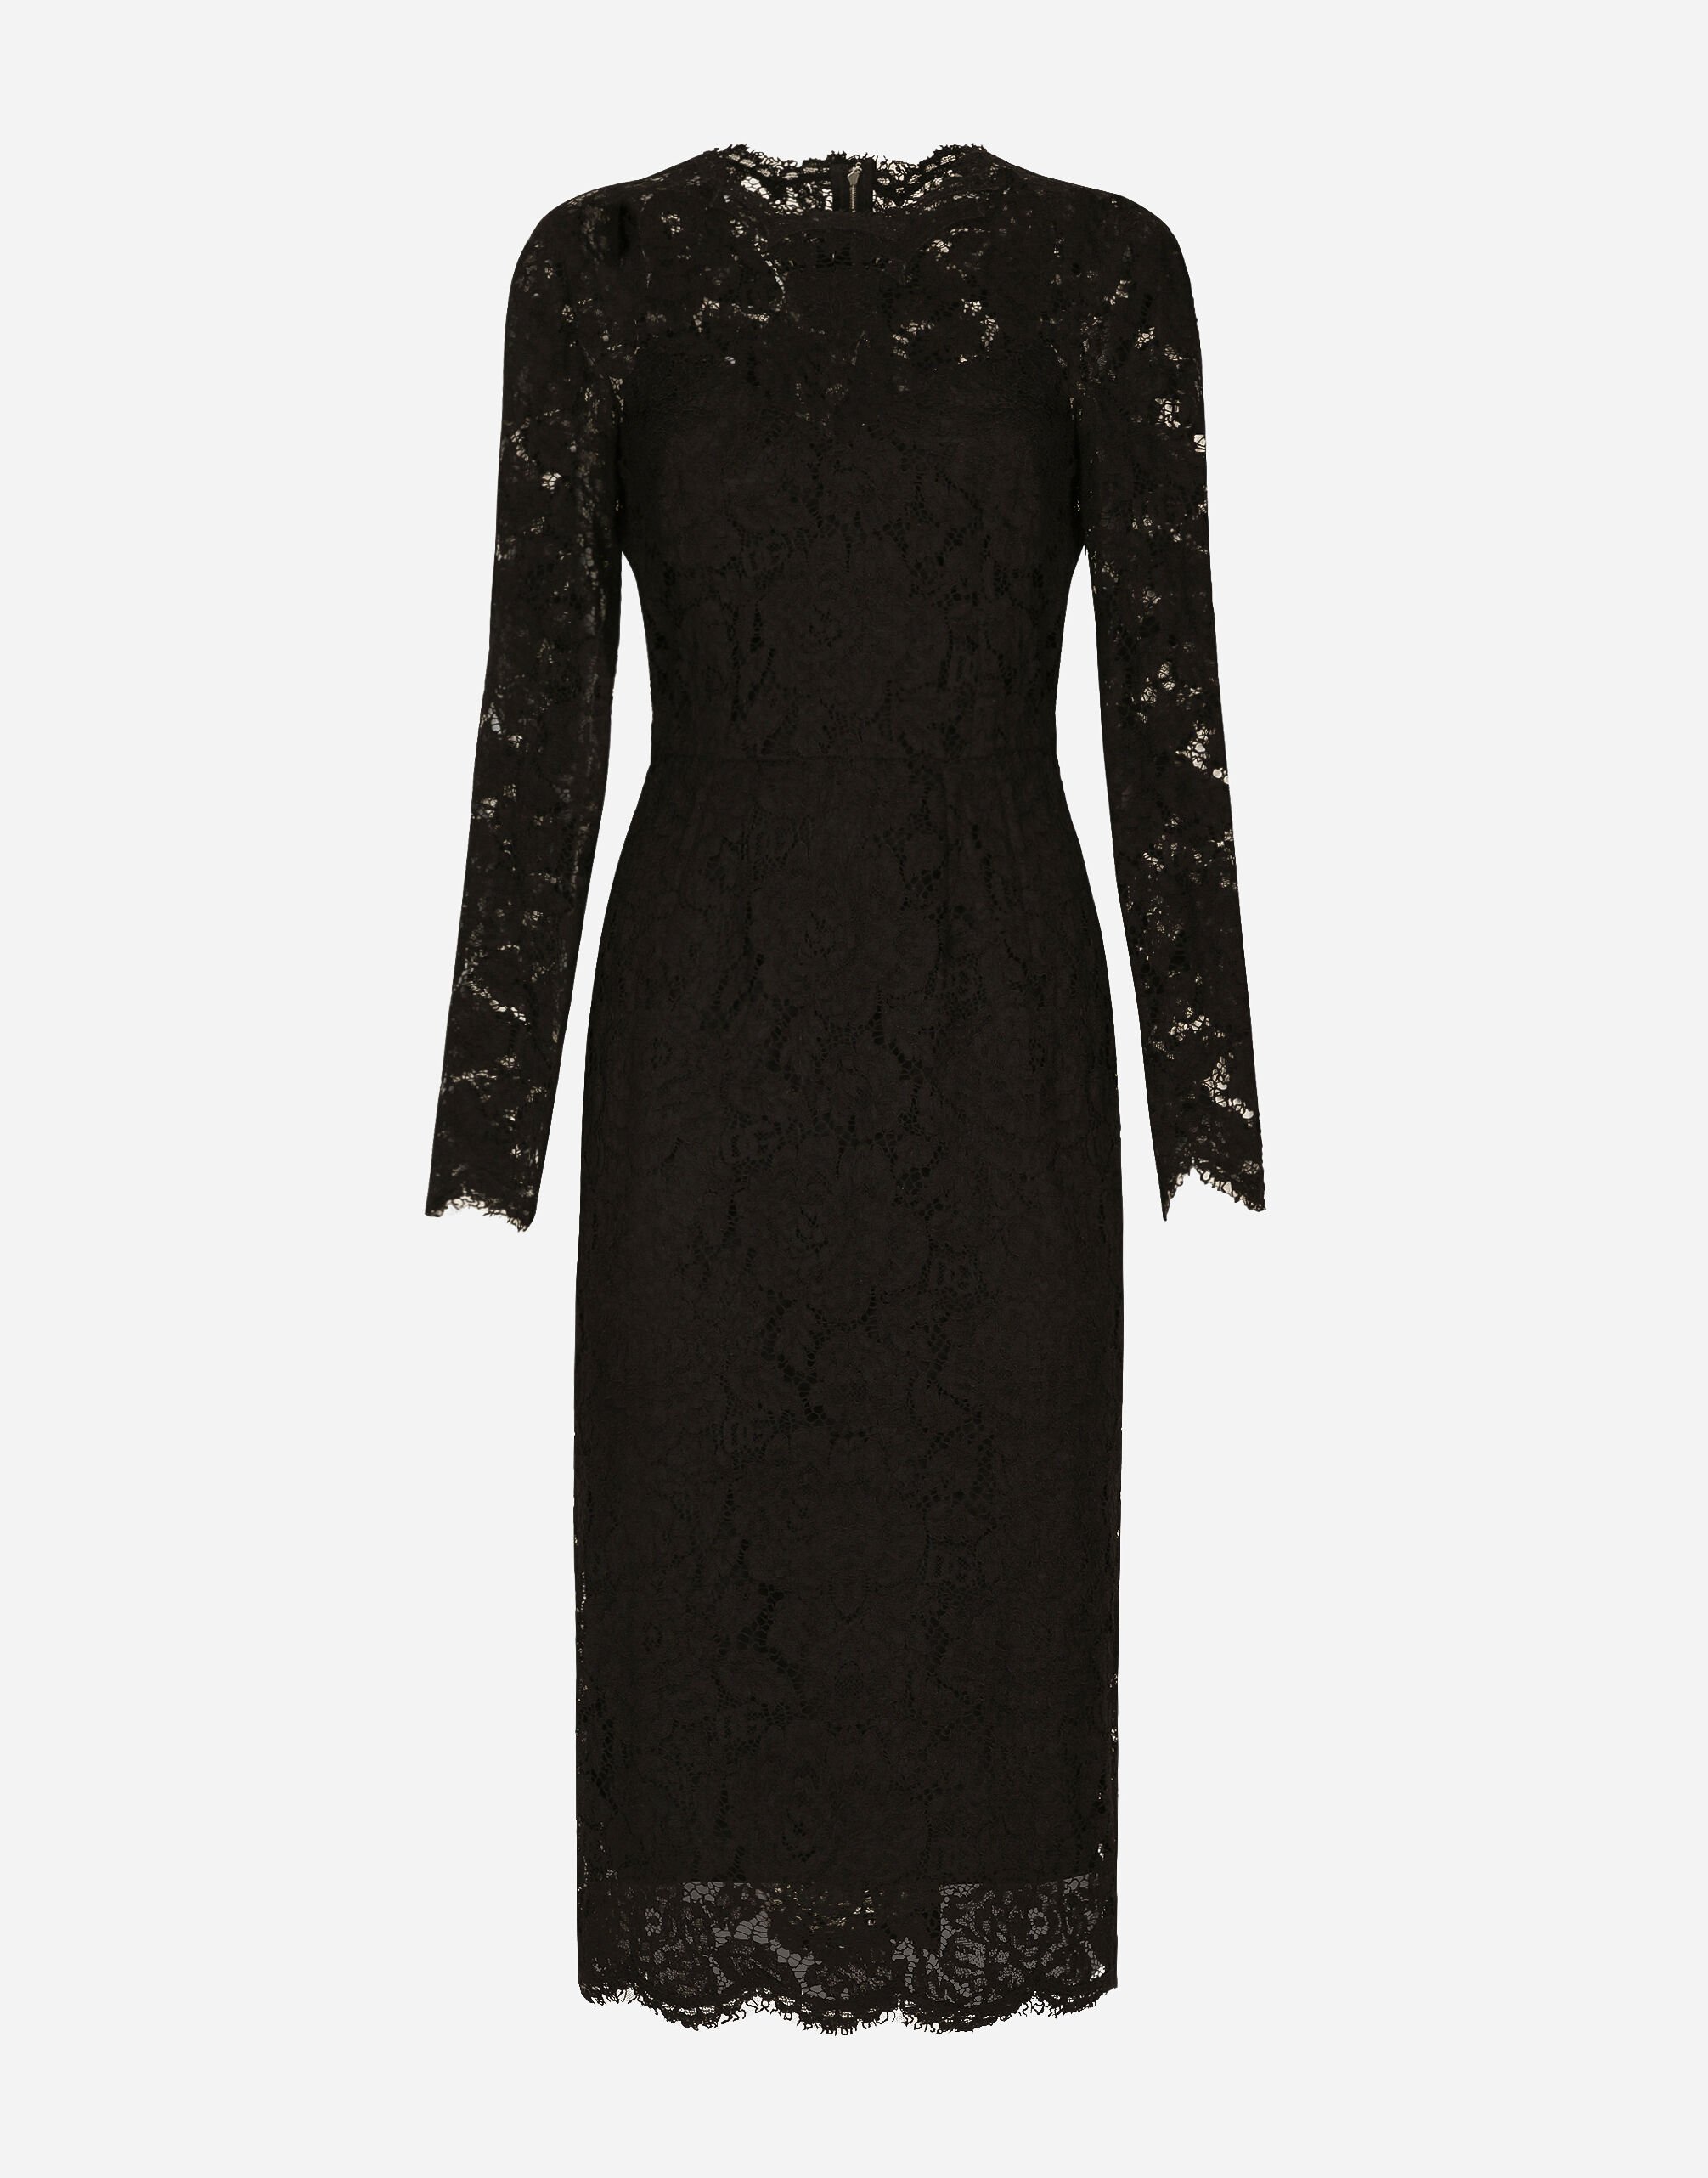 Dolce & Gabbana فستان بأكمام طويلة وطول للربلة من دانتيل مرن موسوم أسود BB6003A1001